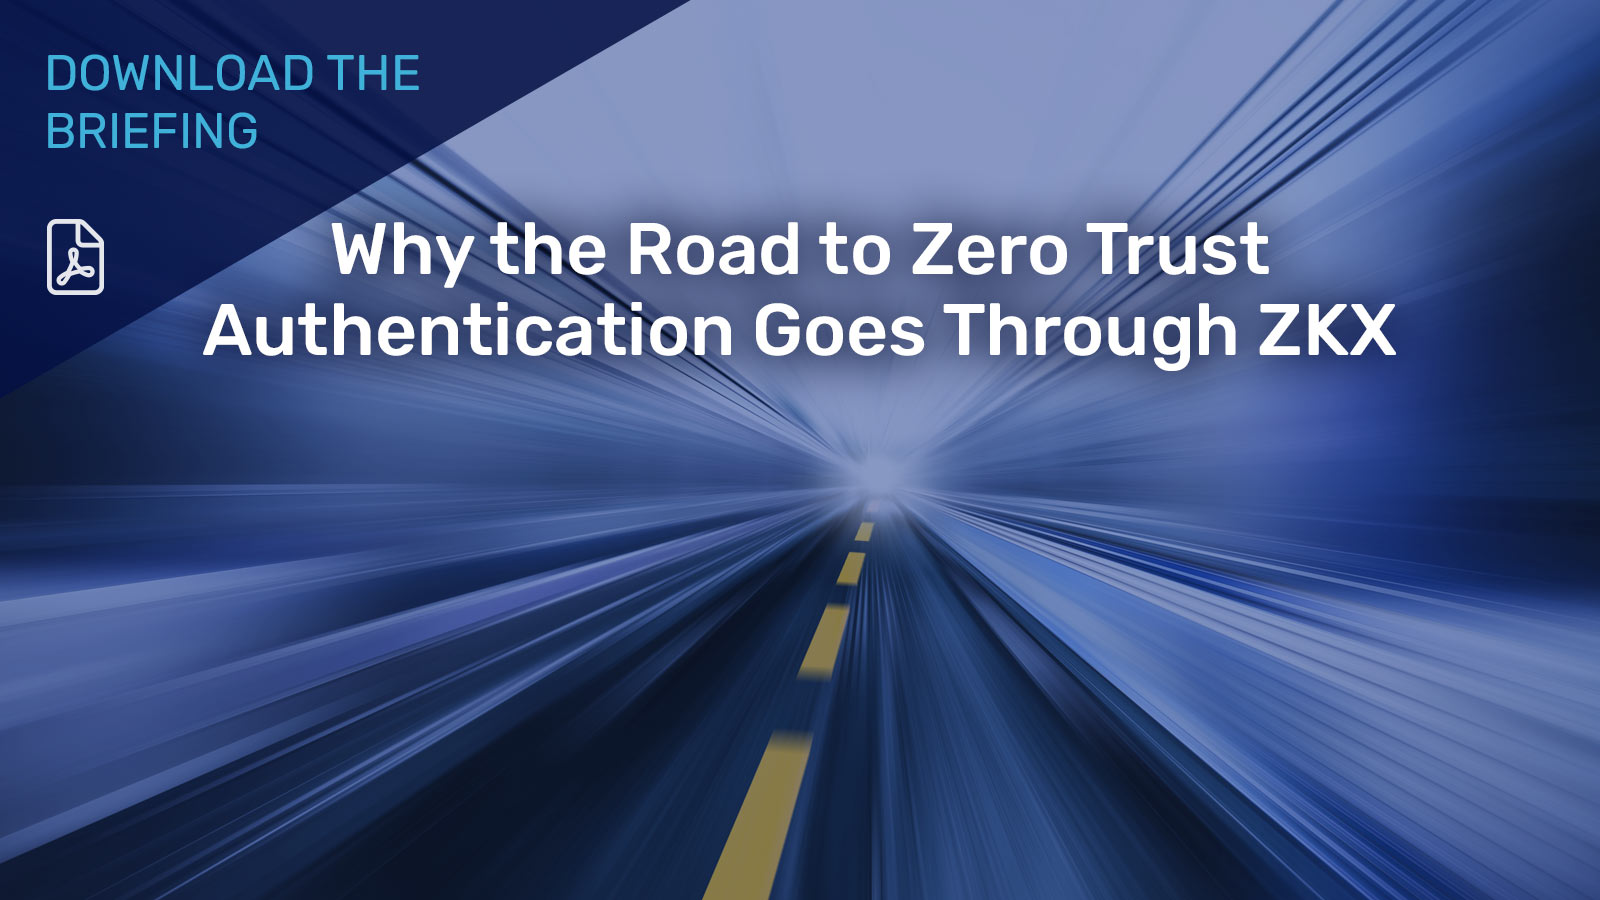 The Road to Zero Trust Authentication